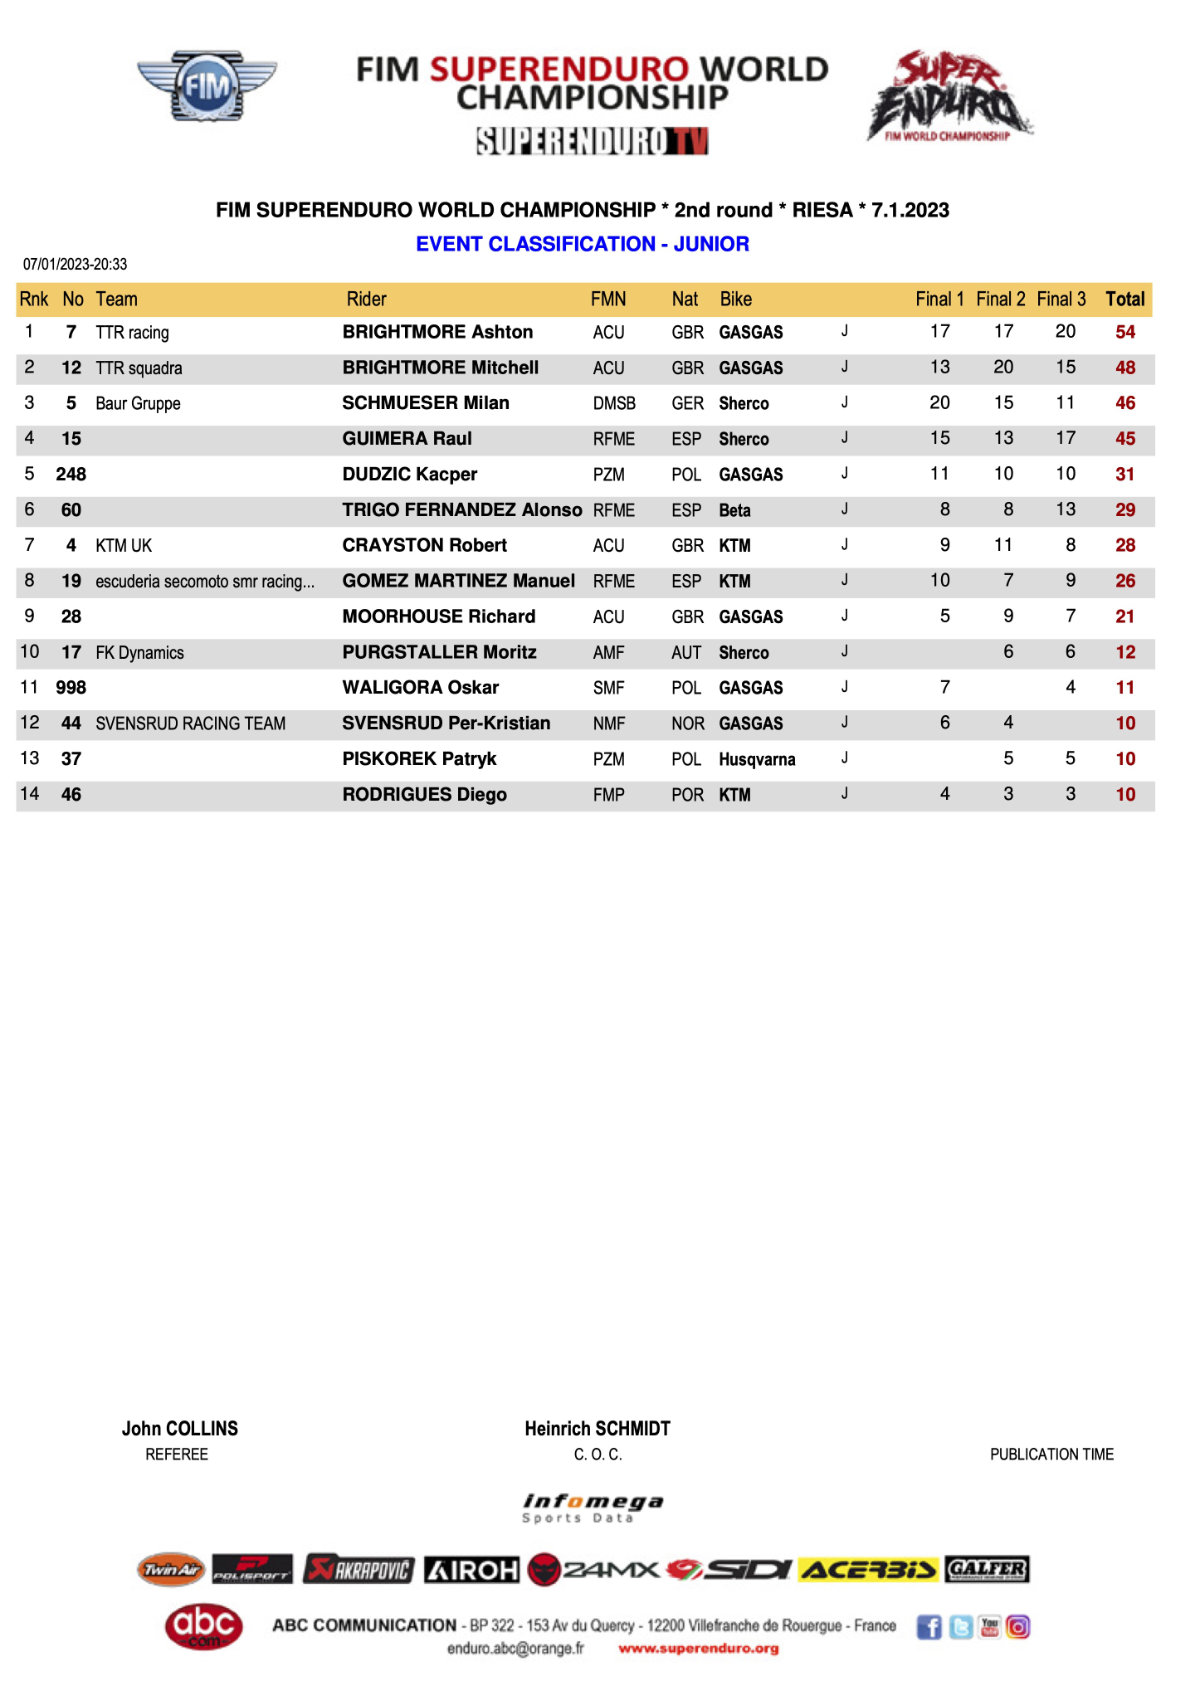 junior-event-classification-2023-superenduro-world-championship_p84738